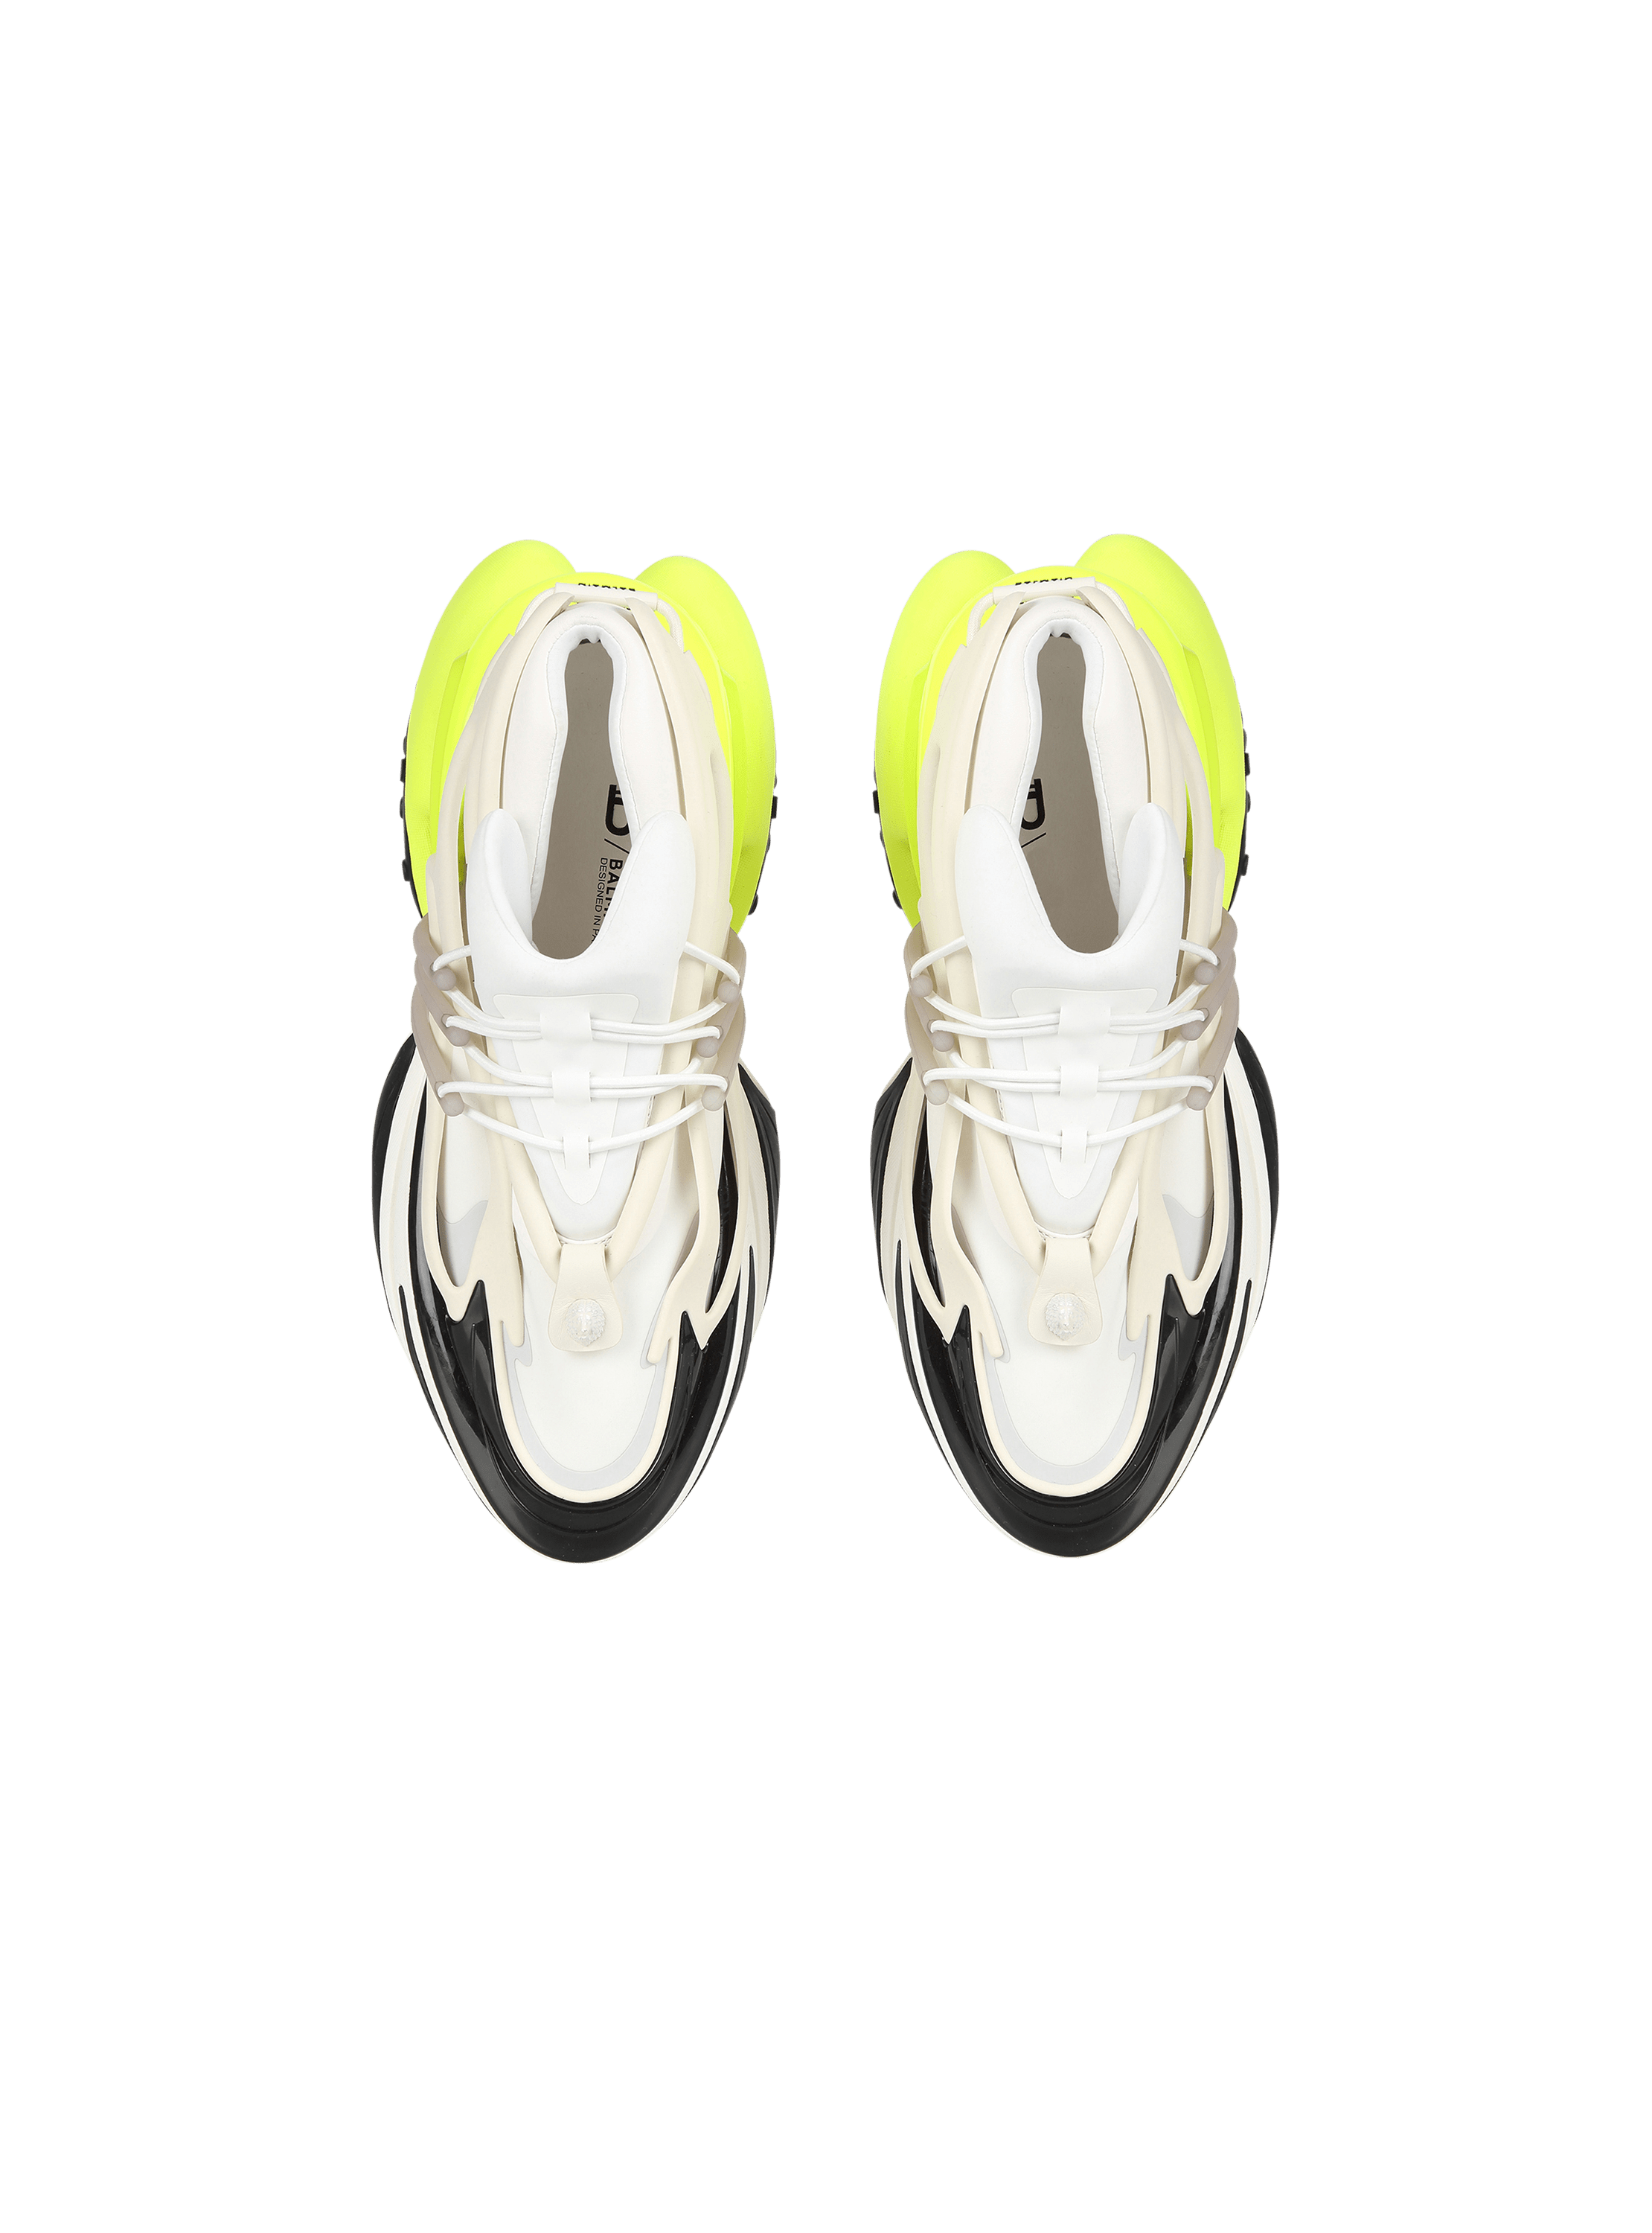 Scarpe Louis Vuitton Mocassini Sneakers Uomo Taglia 11.5 Shoes Pelle N 45